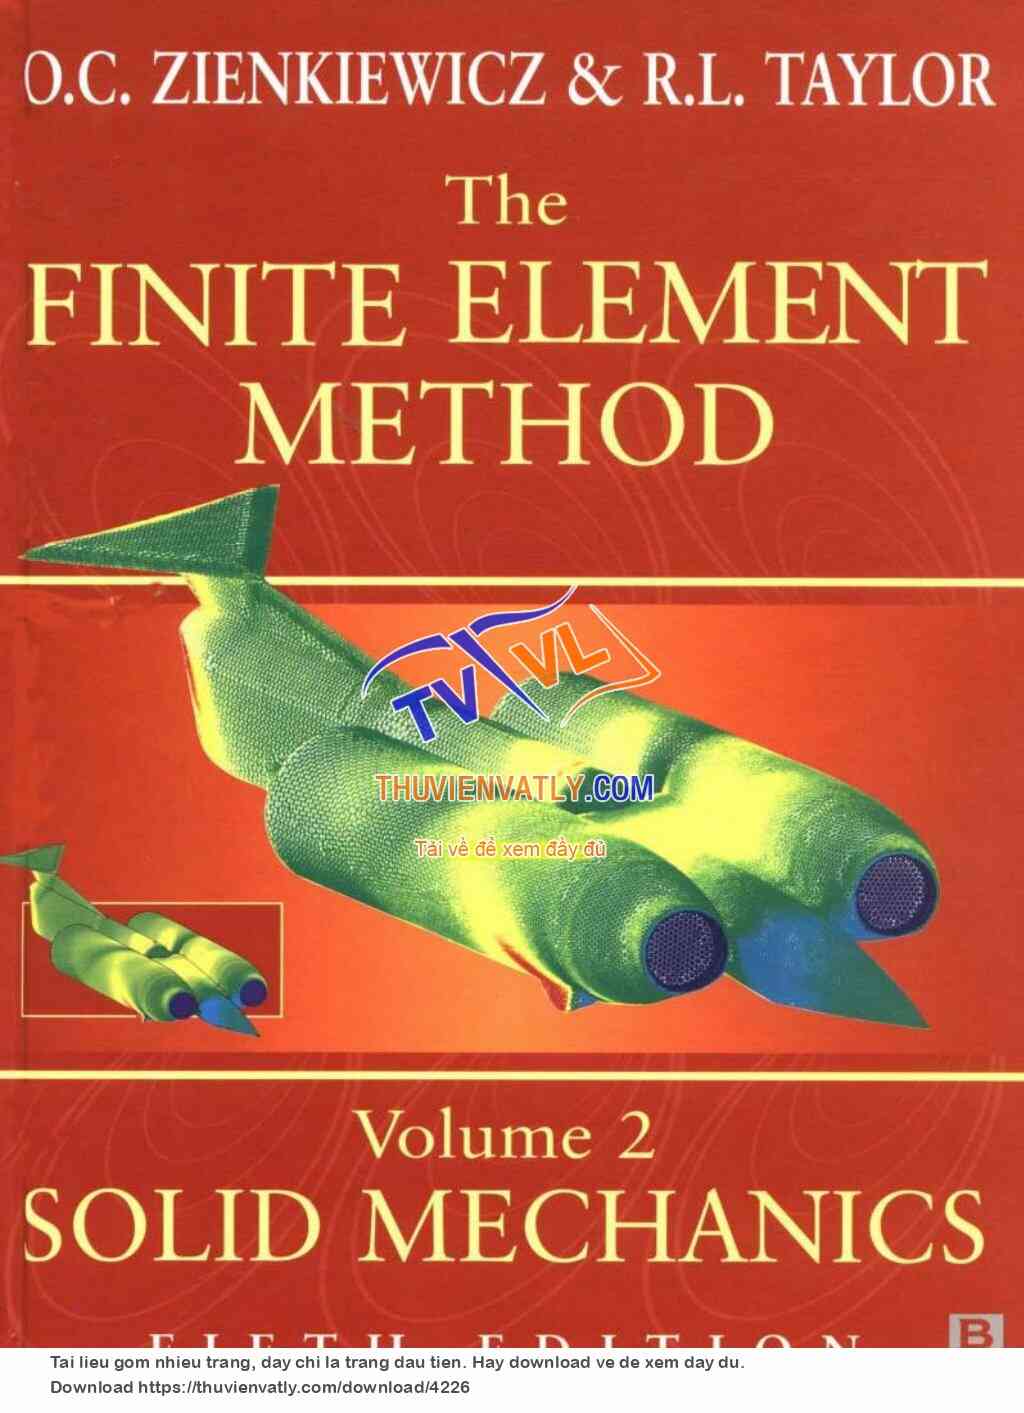 The Finite Element Method, Vol 2 - Solid Mechanics